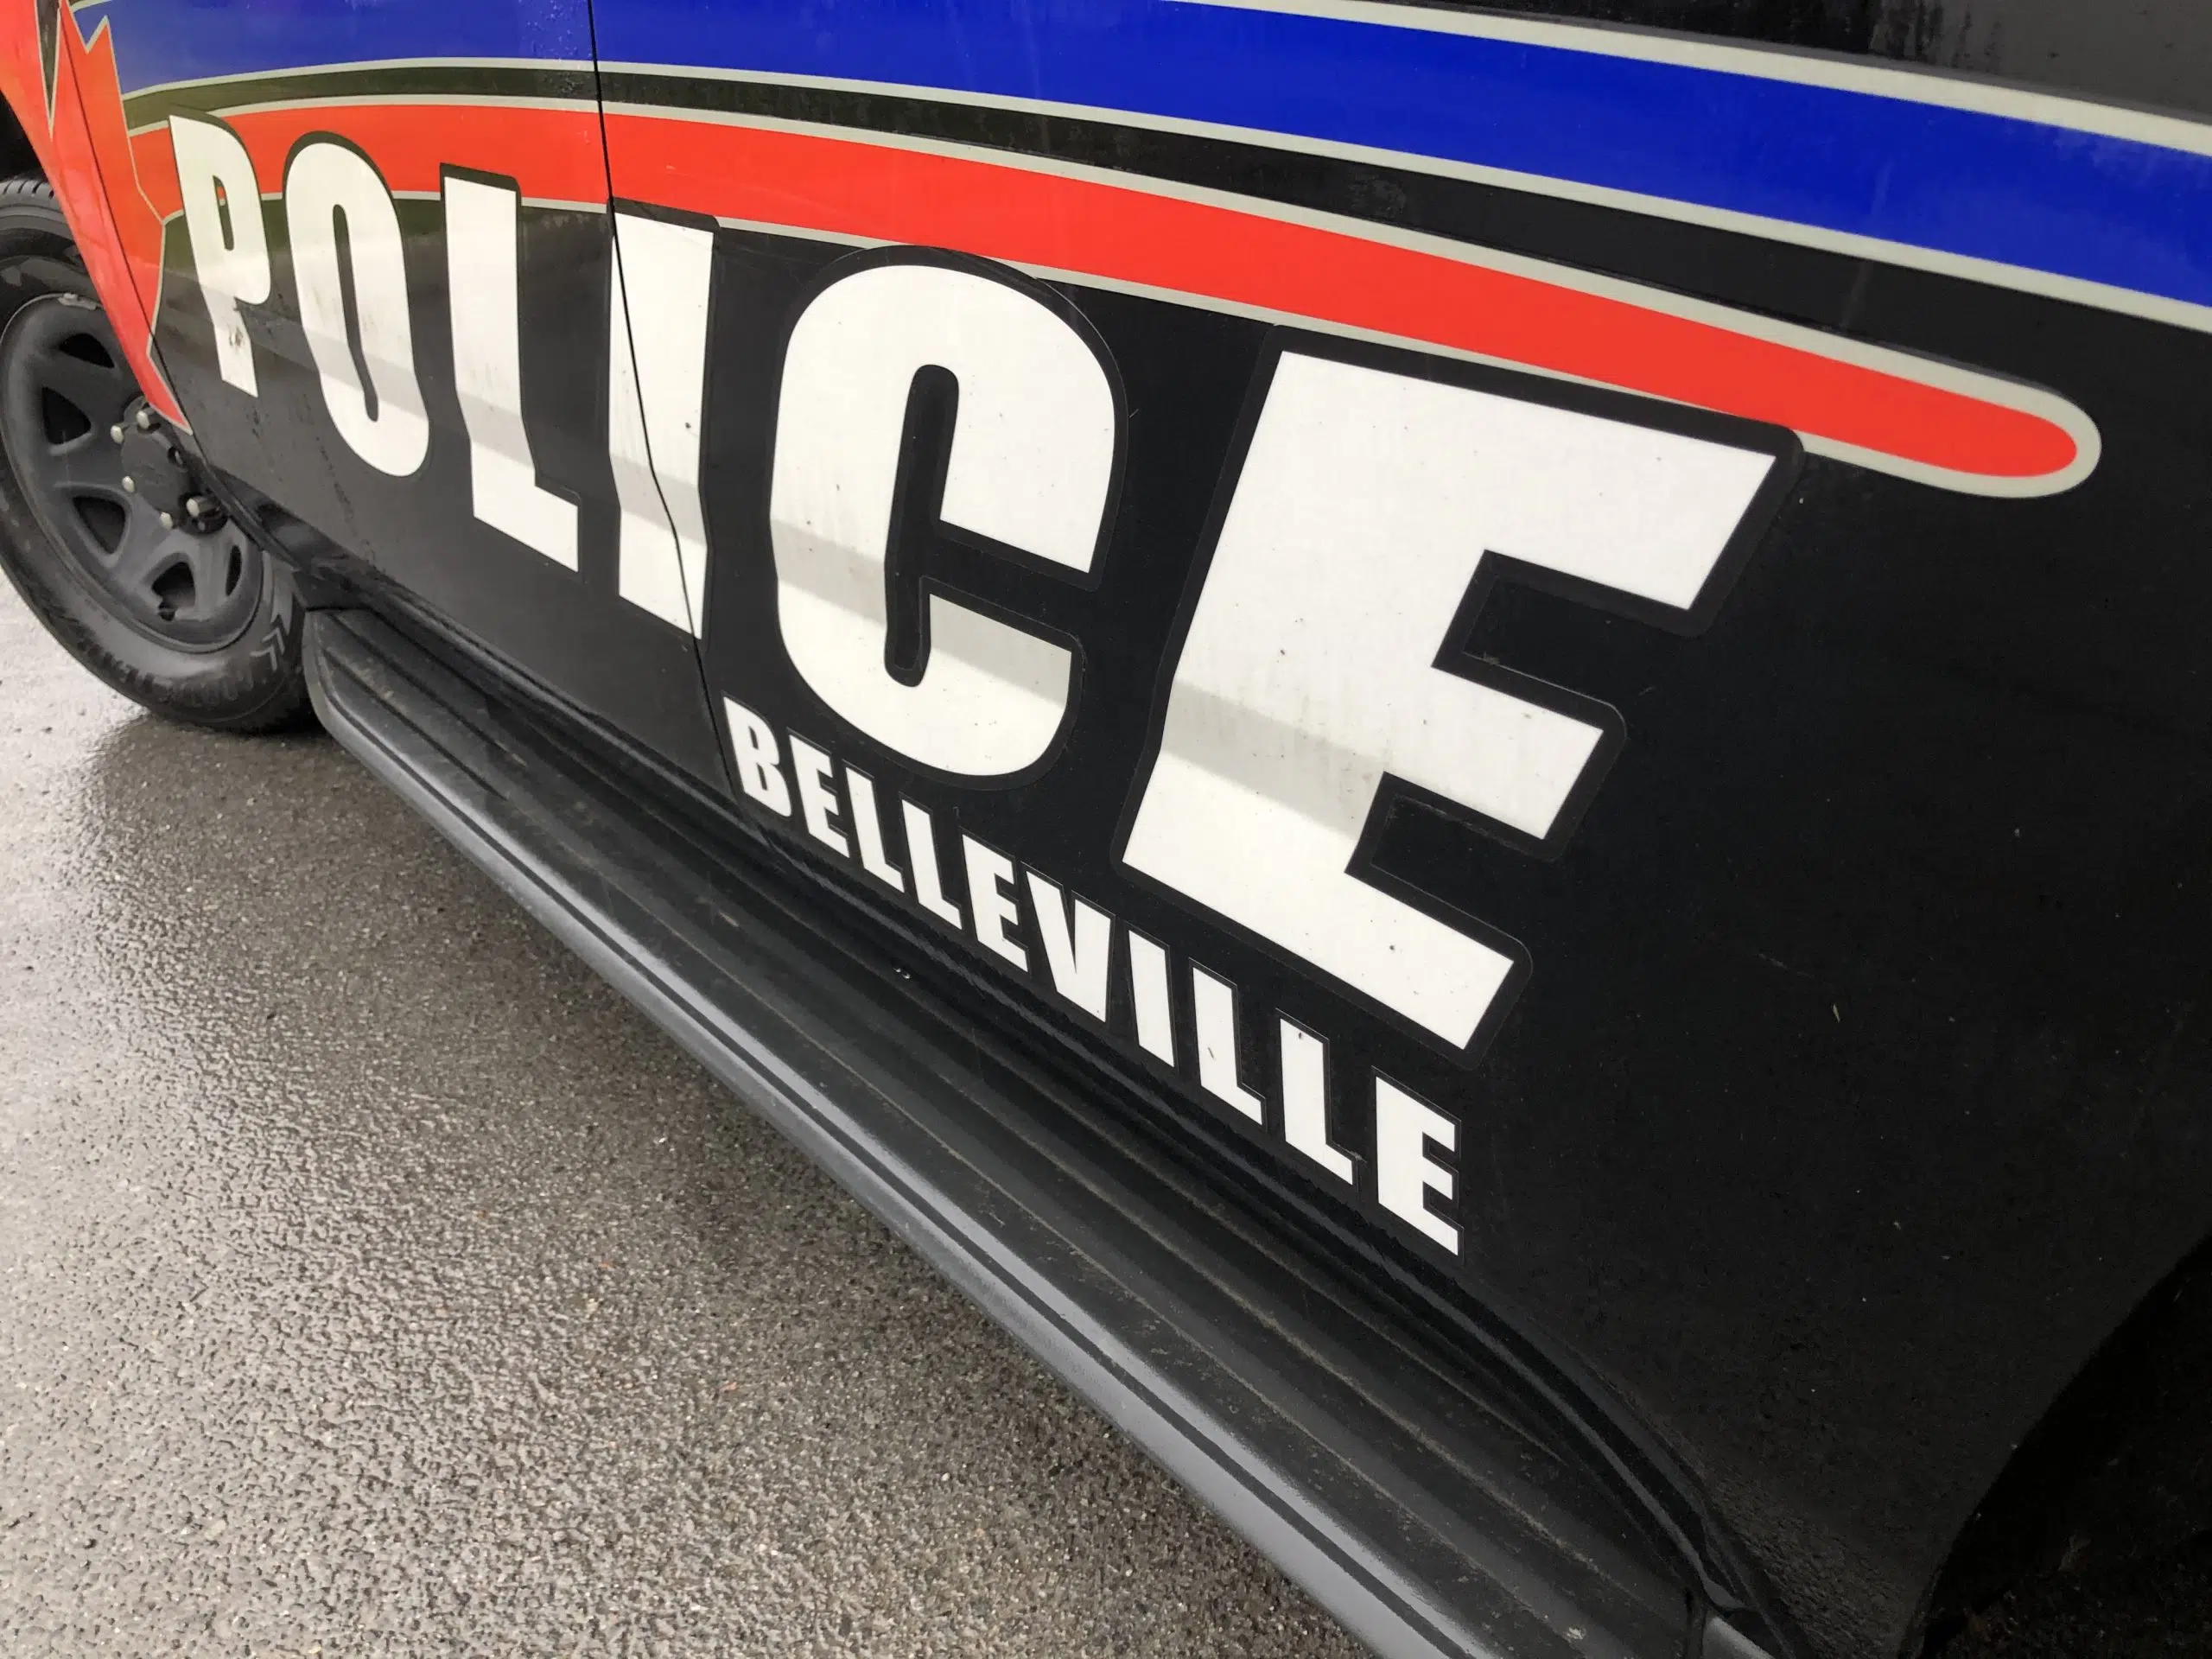 Belleville officer recognized for finding missing girl, arresting human trafficking suspects